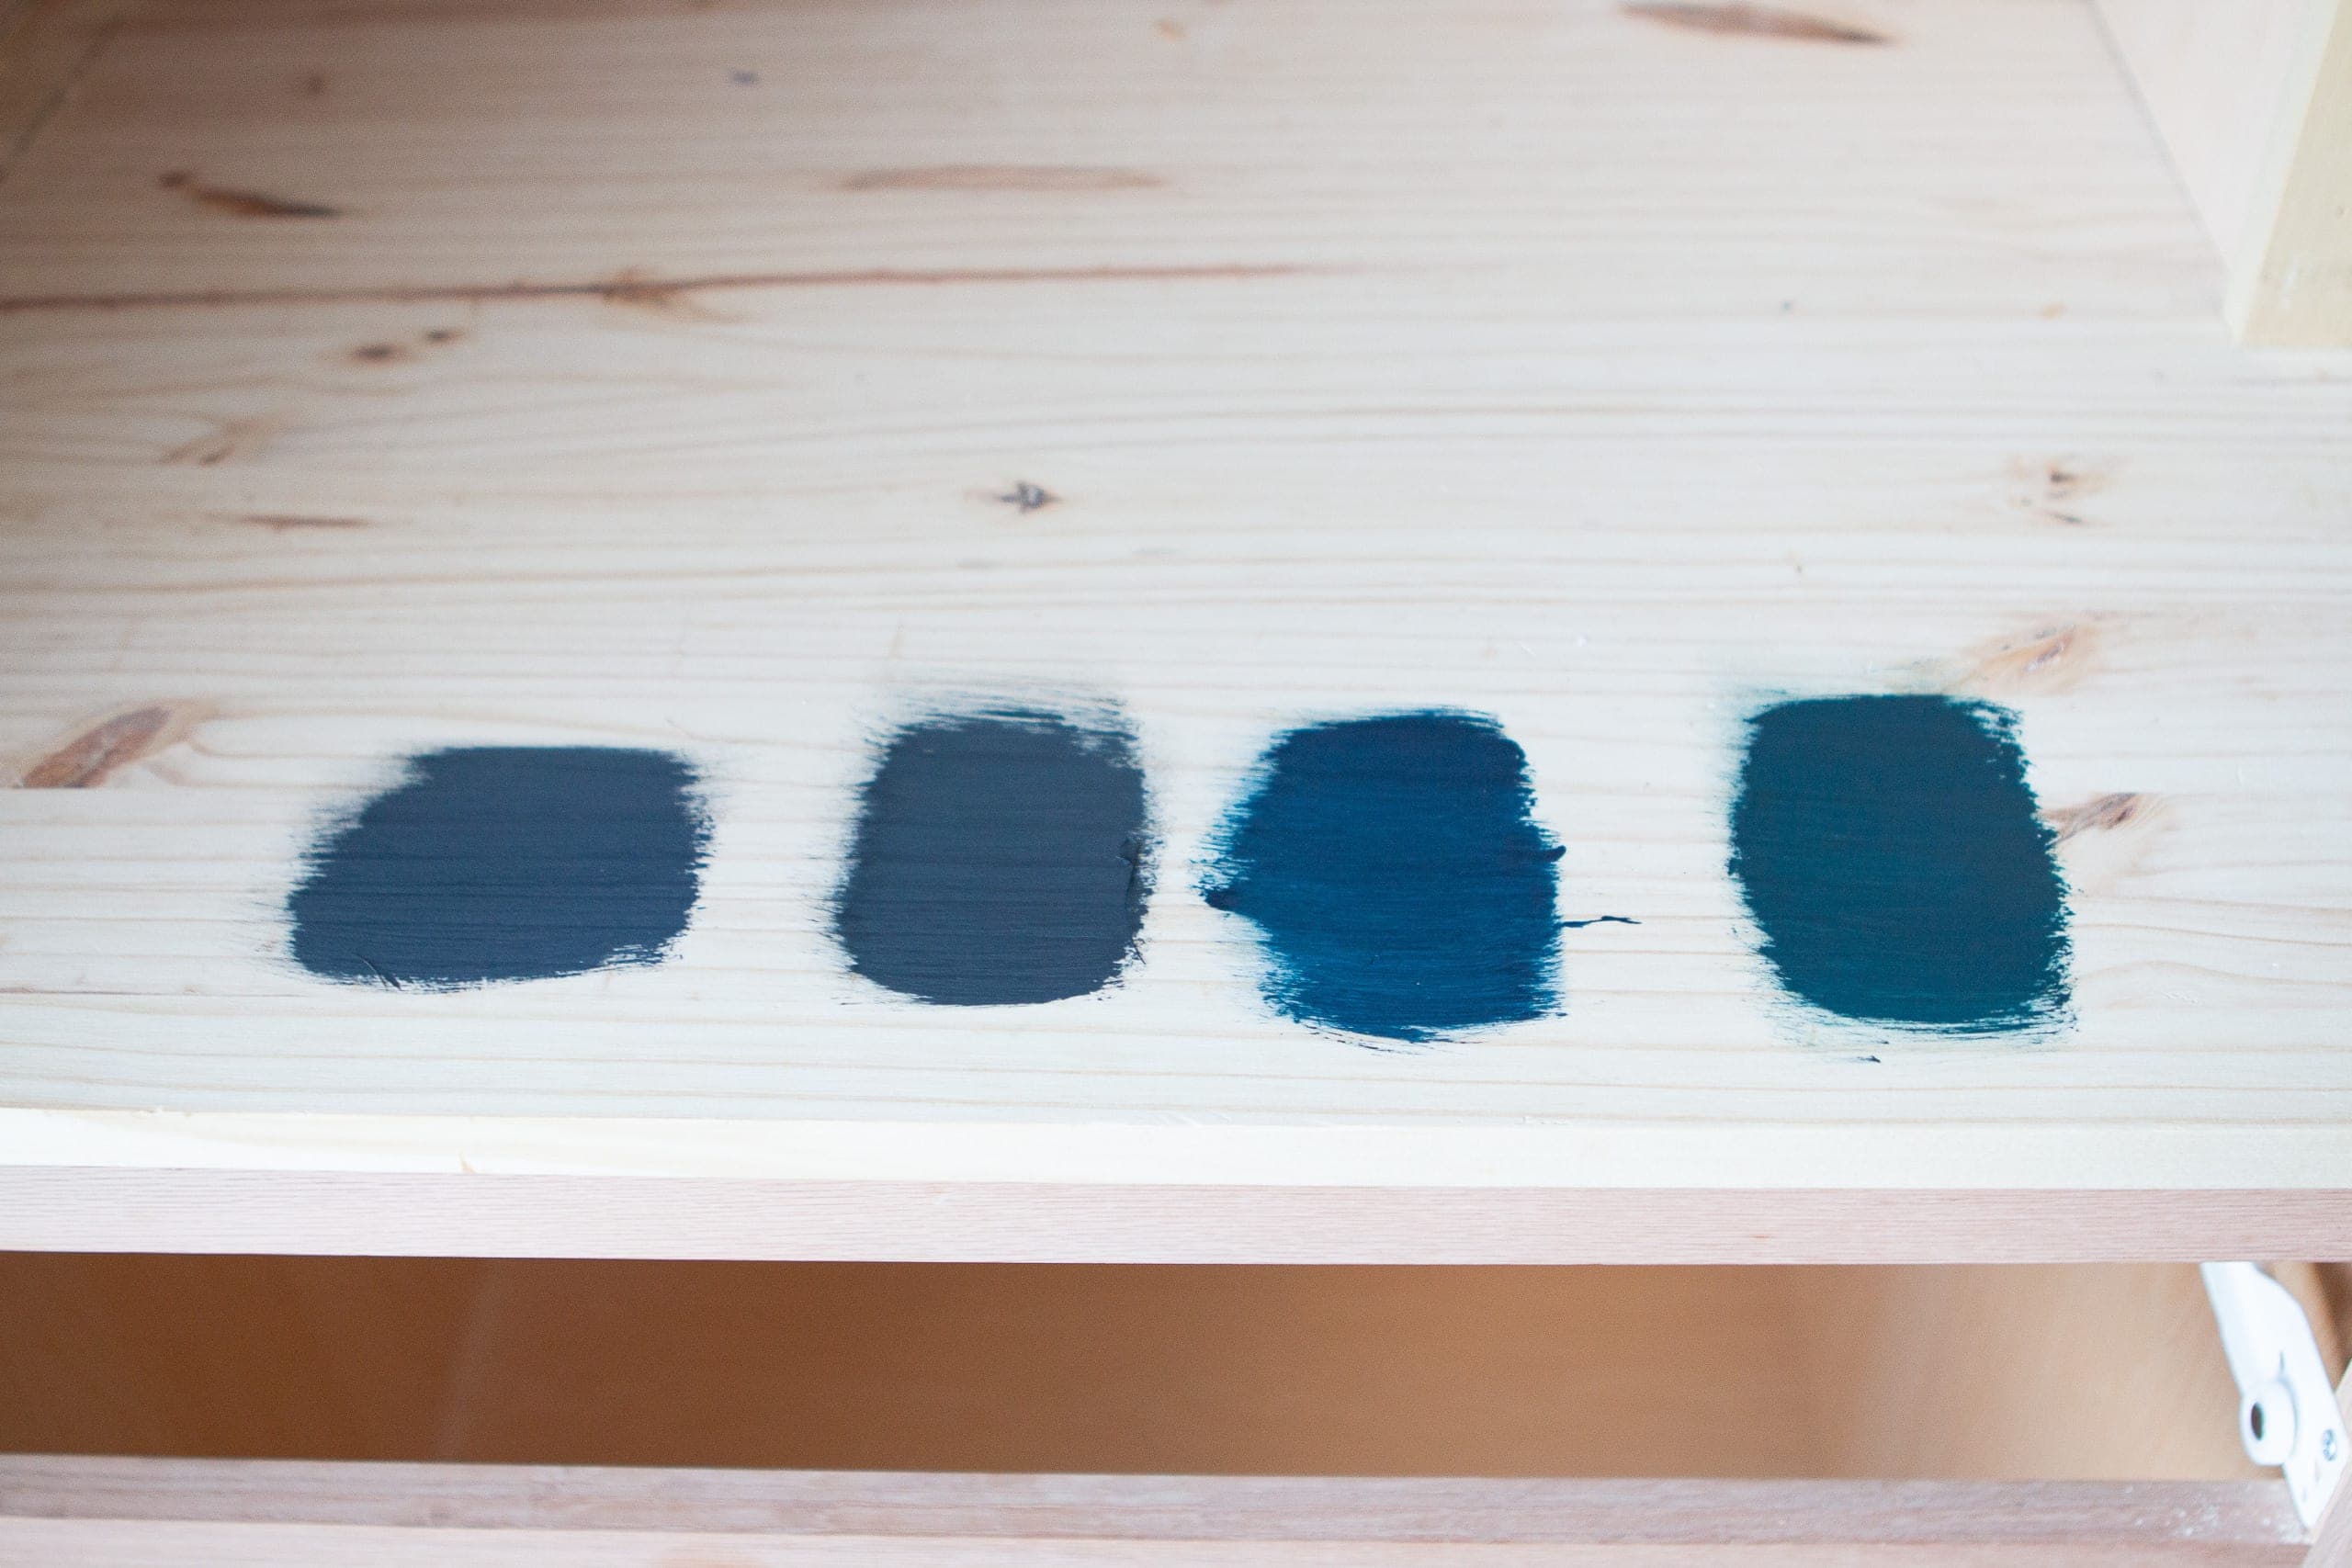 Choosing dark blue paint colors